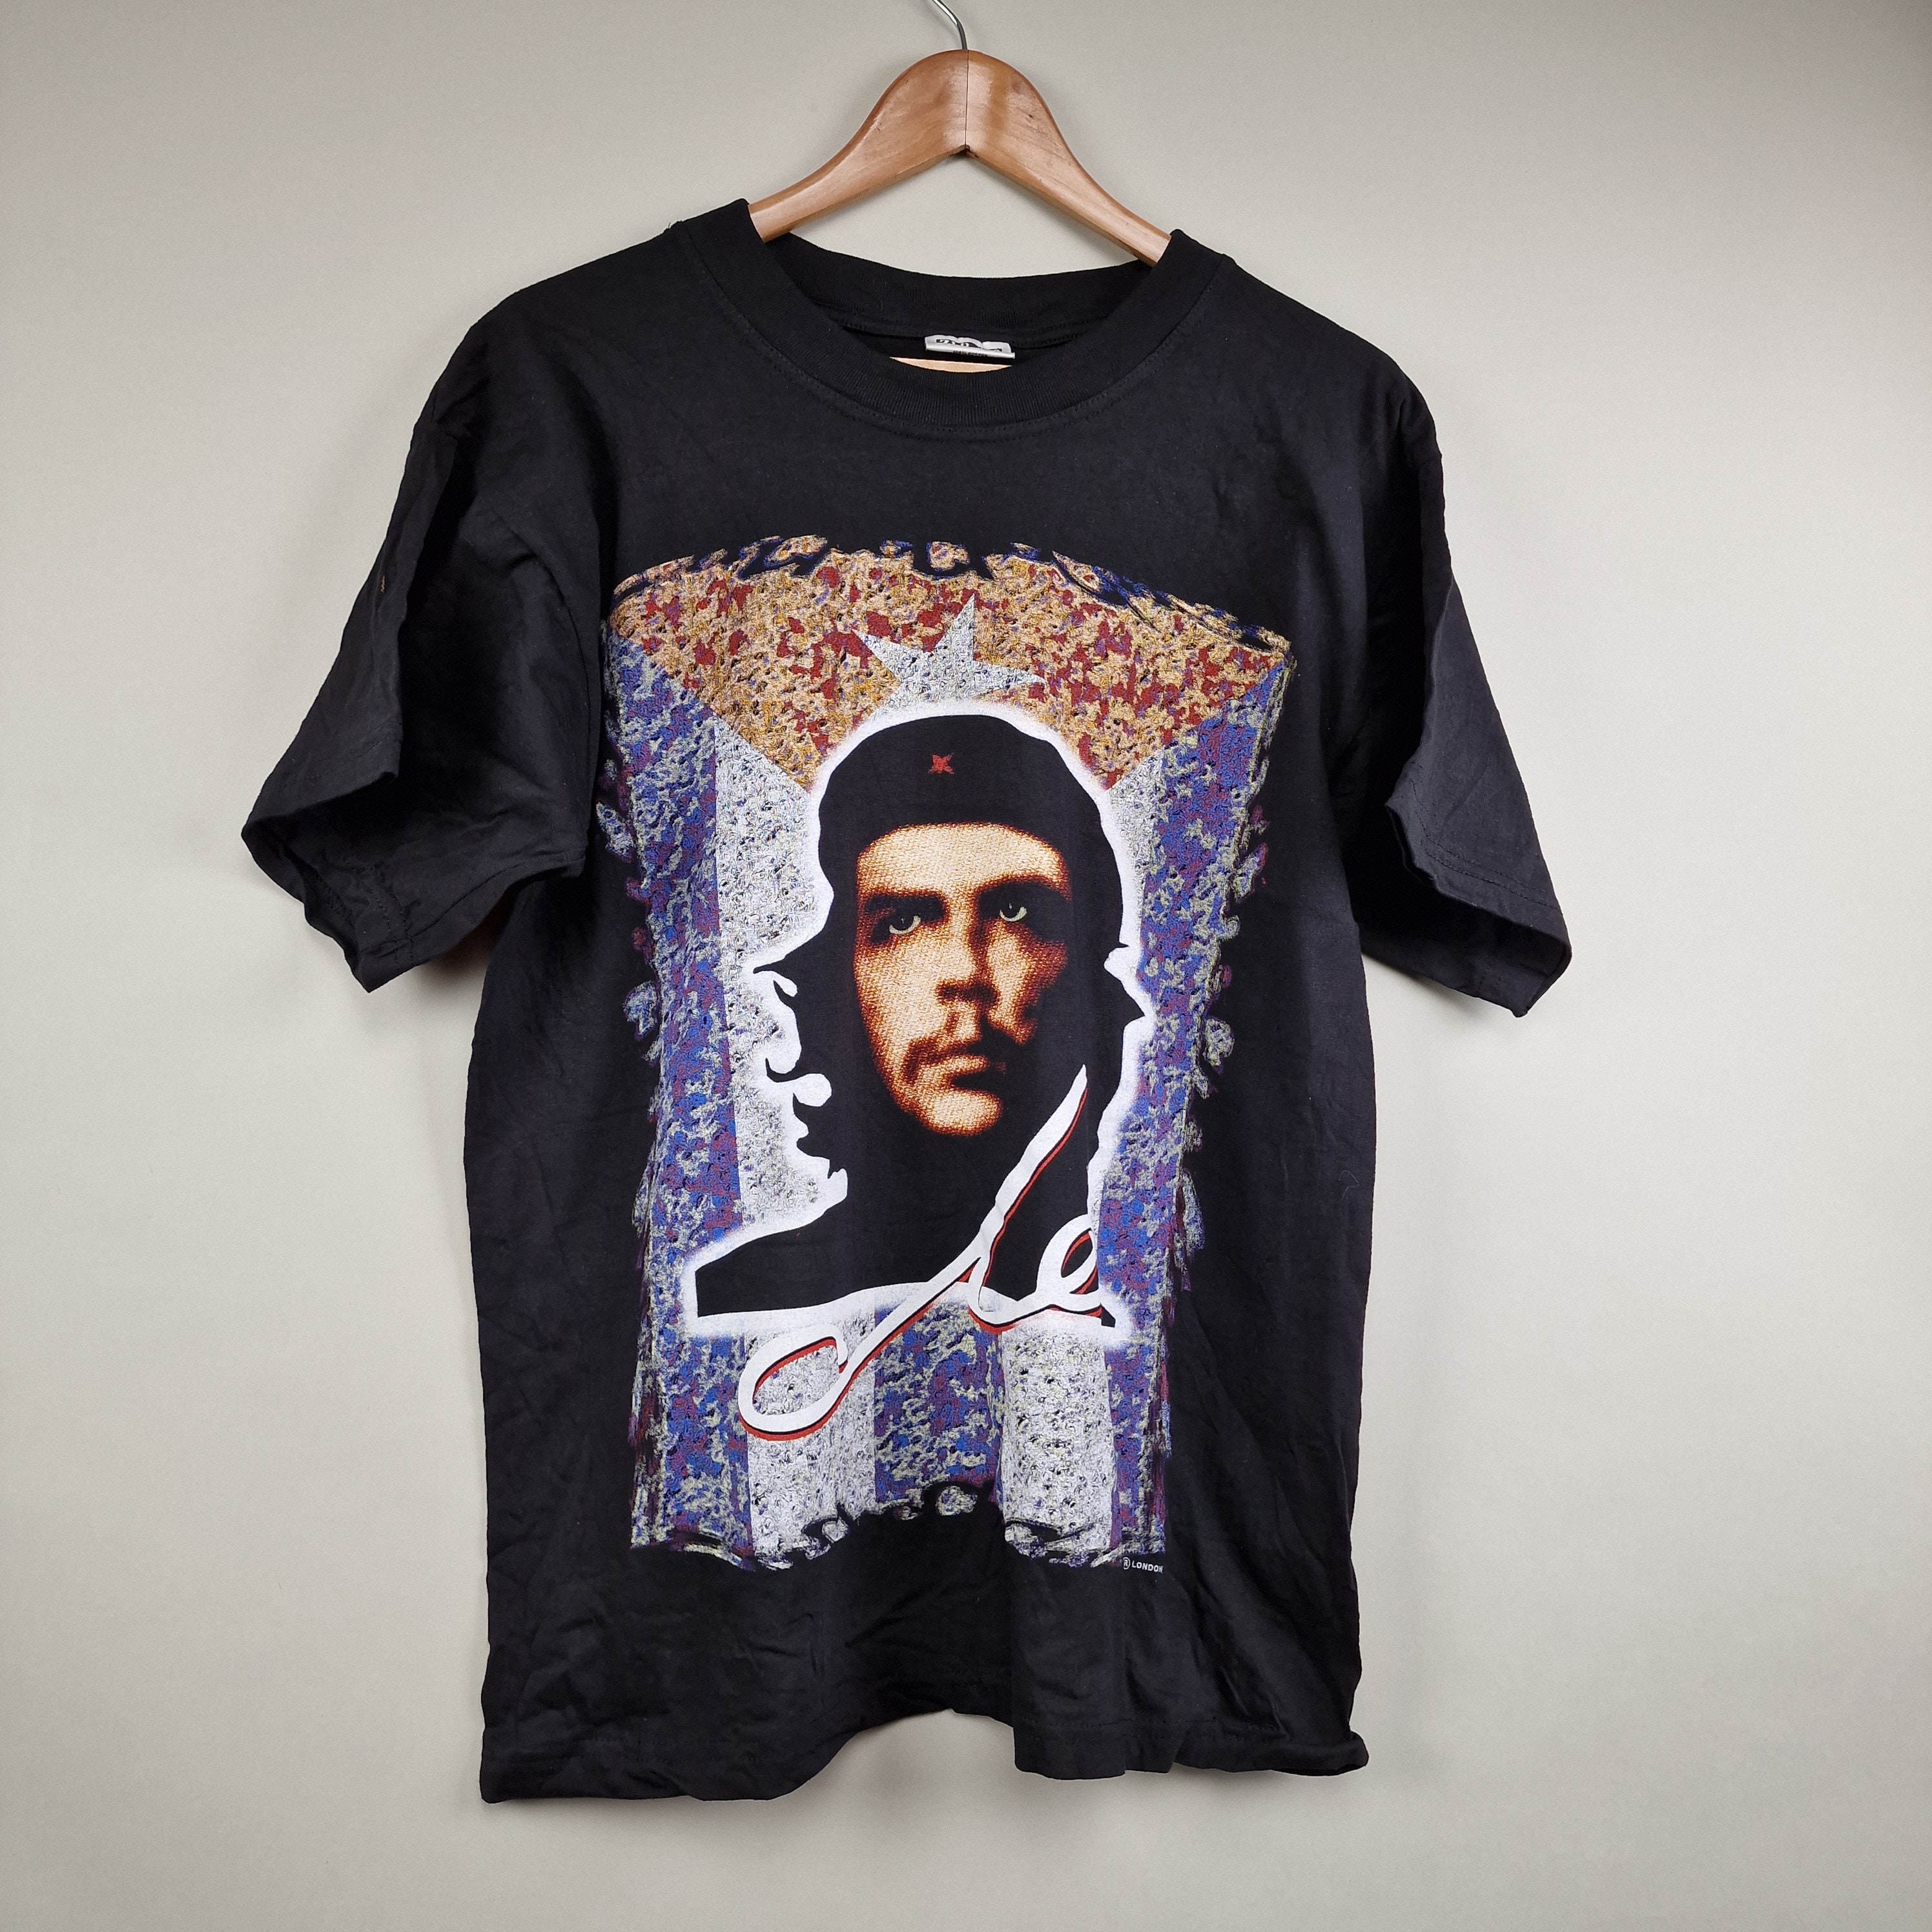 Vintage 1990's Che Guevara T-Shirt Sz. XL